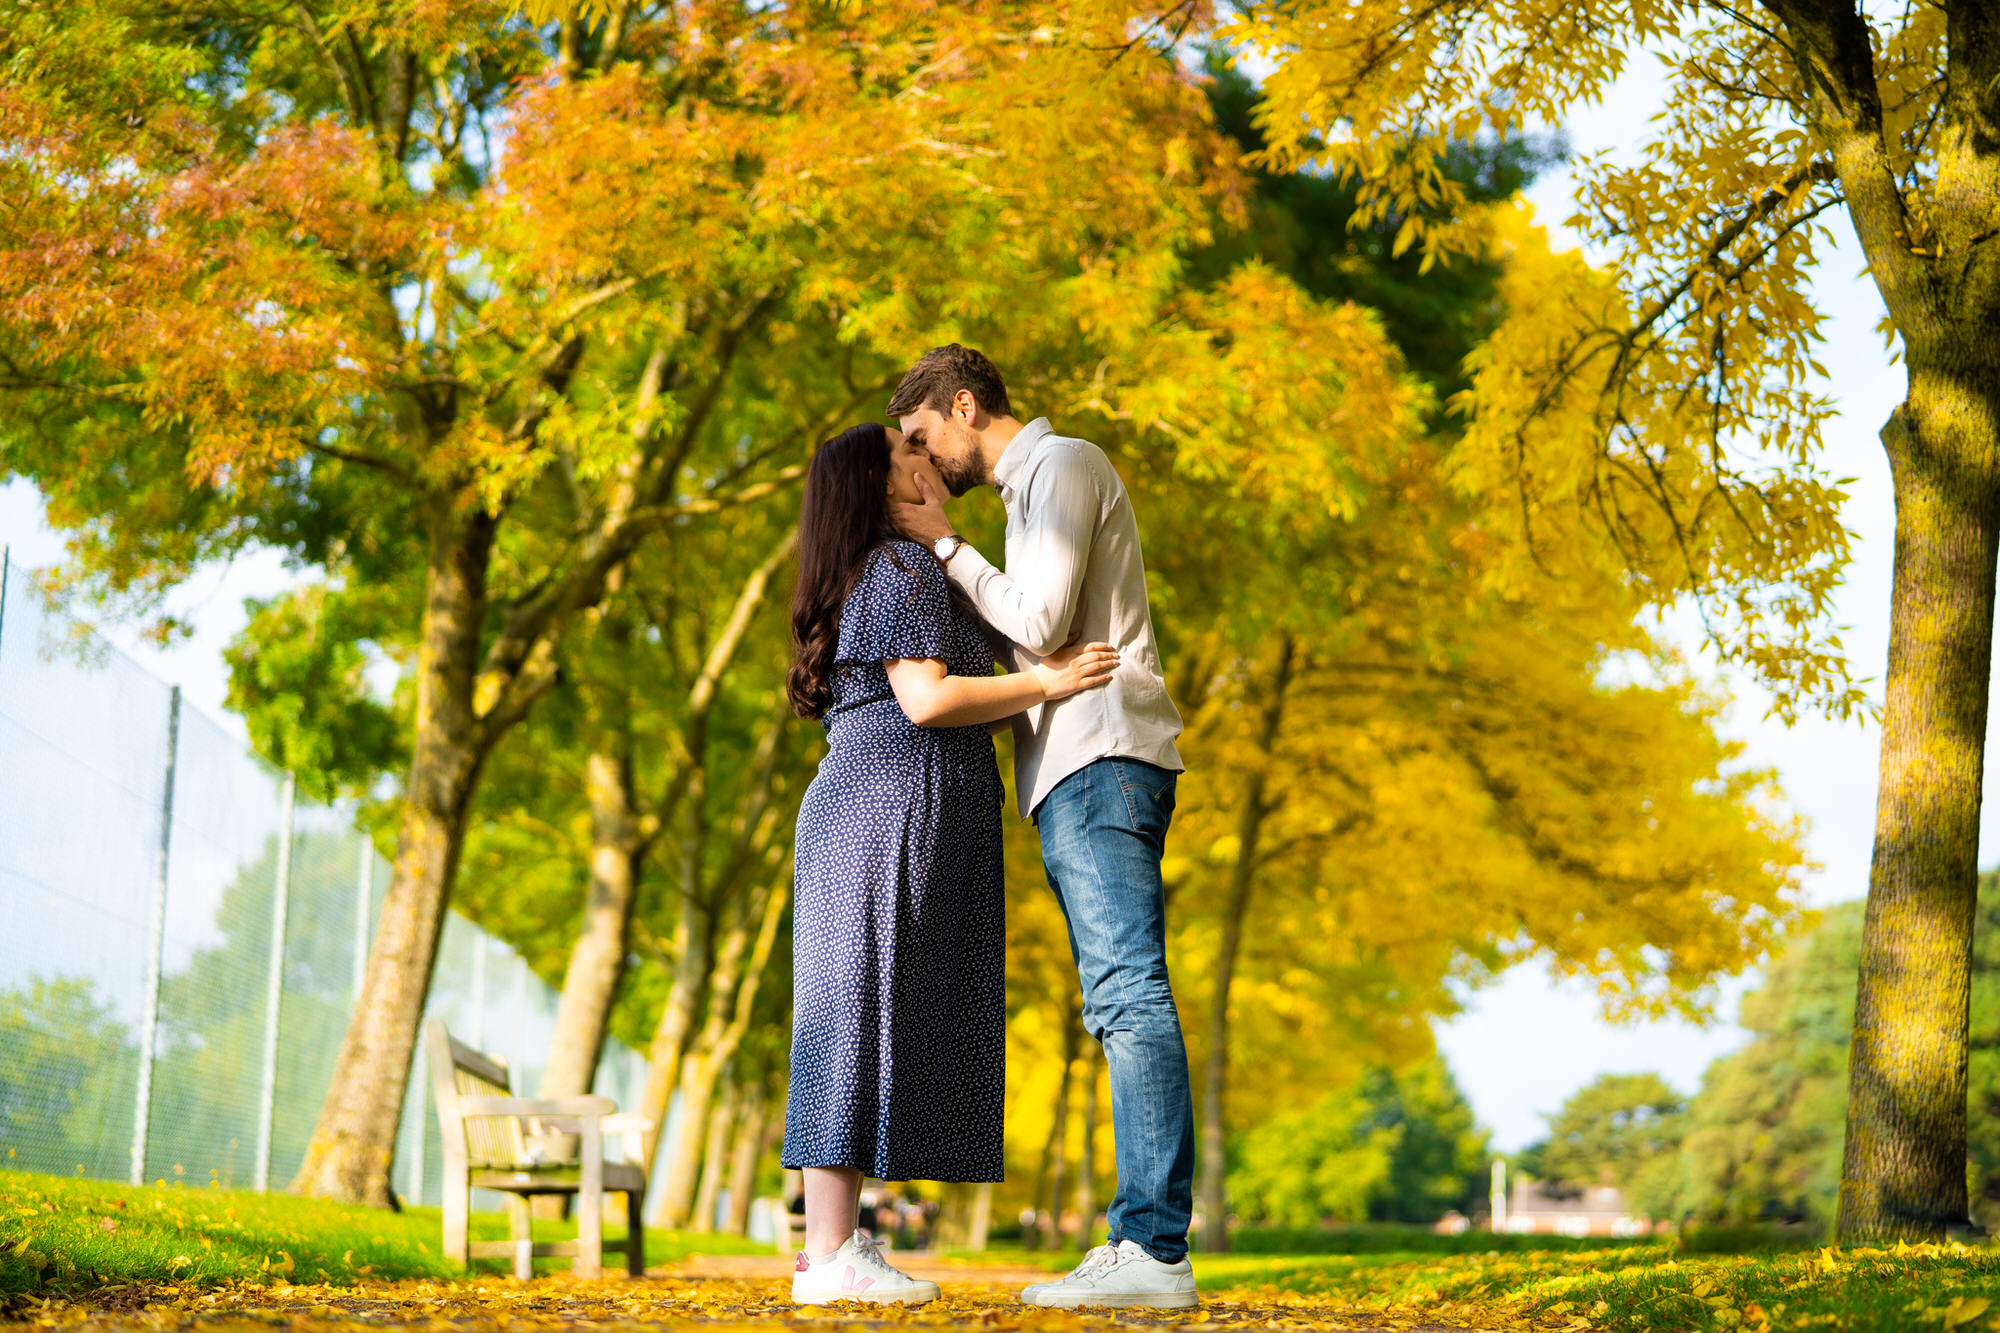 Eaton Park autumn couple photo shoot